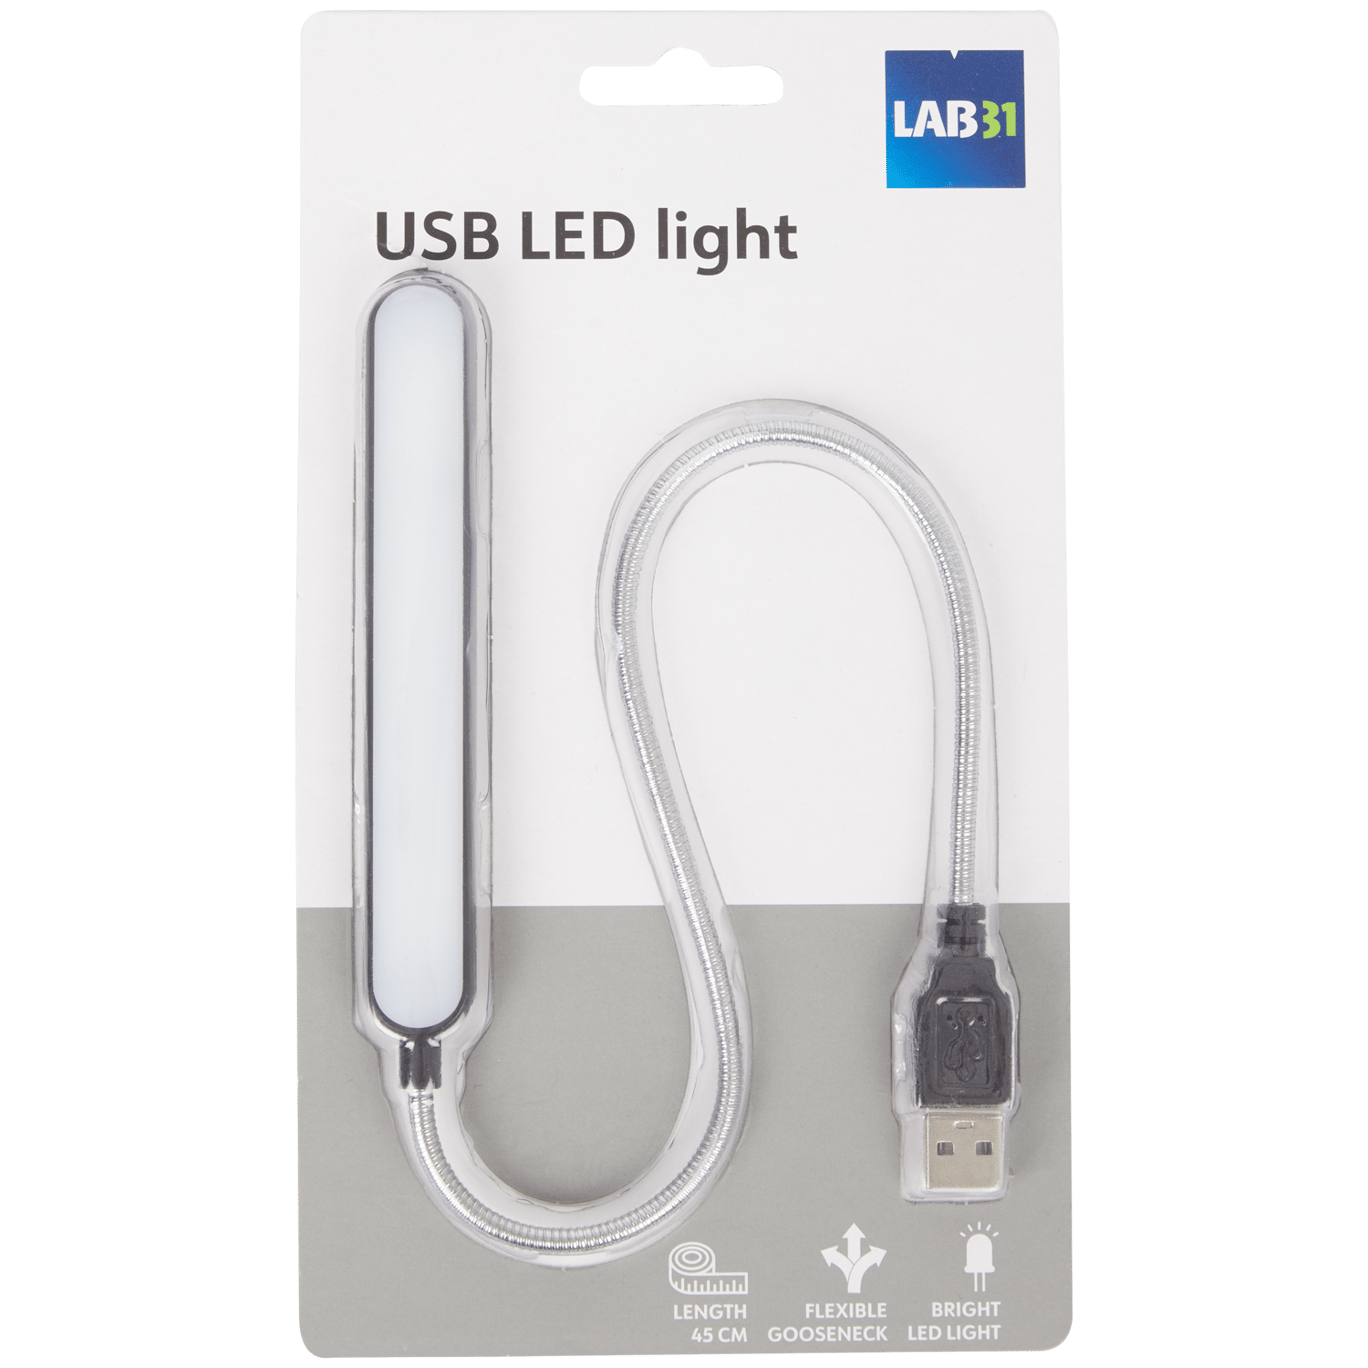 Universal - Bricolage USB LED Lampe Clignotant Auto-émission